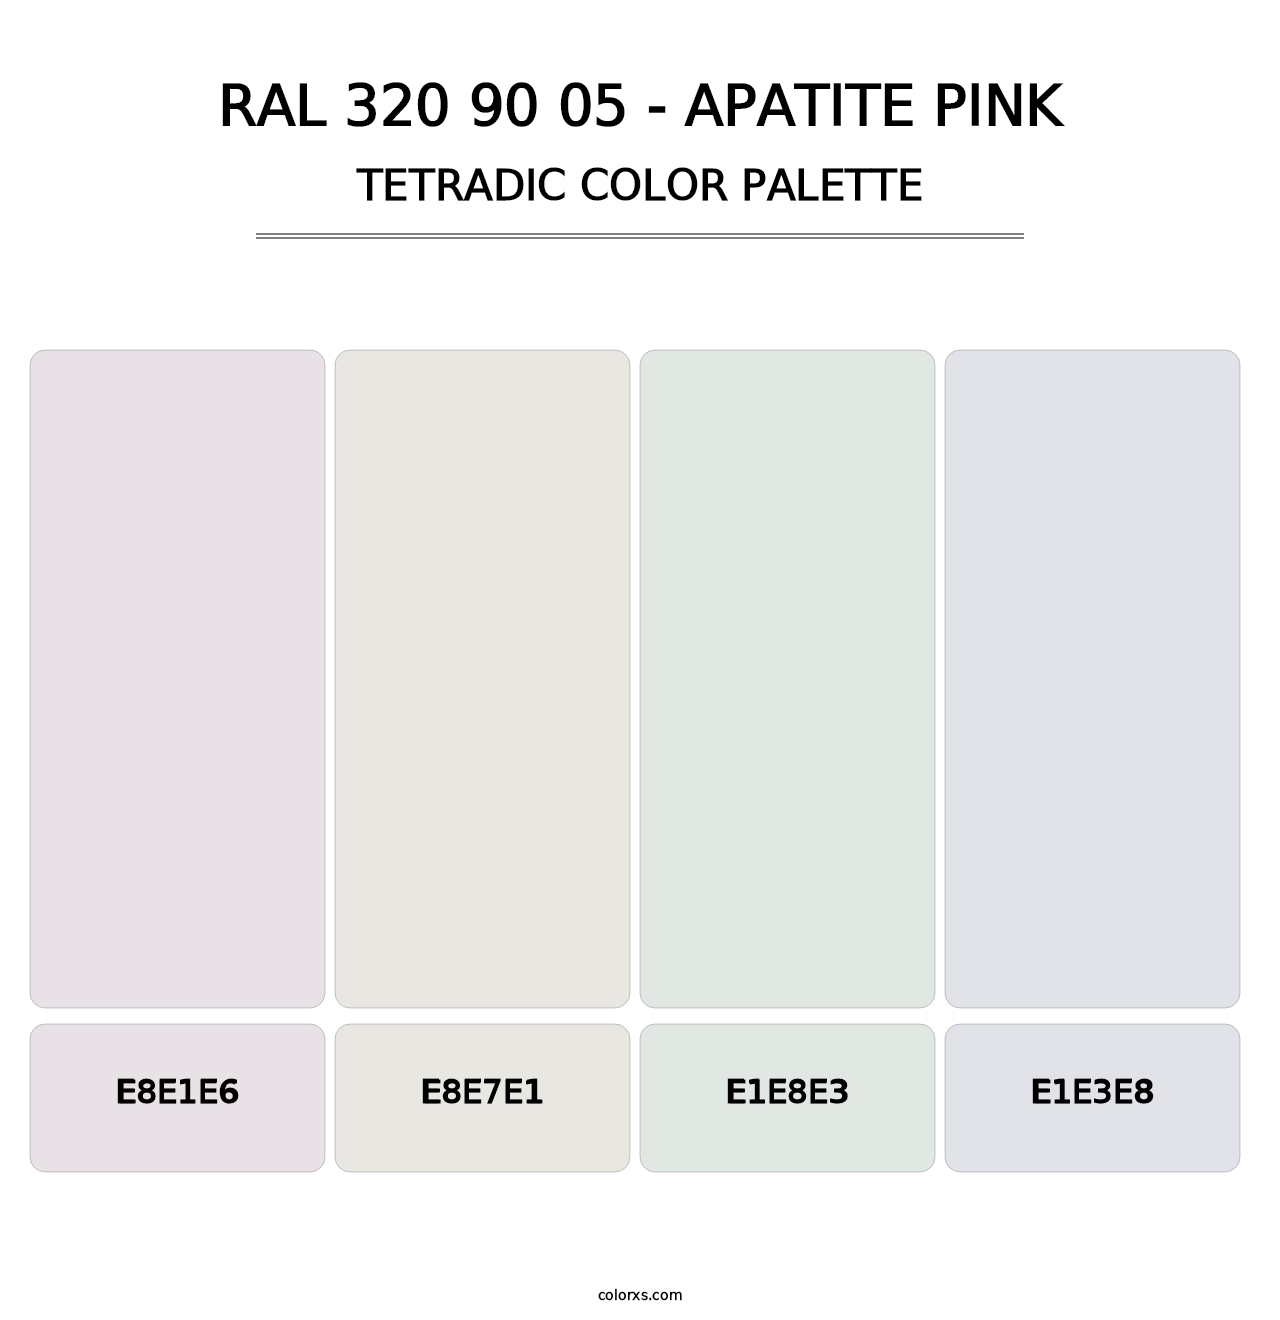 RAL 320 90 05 - Apatite Pink - Tetradic Color Palette